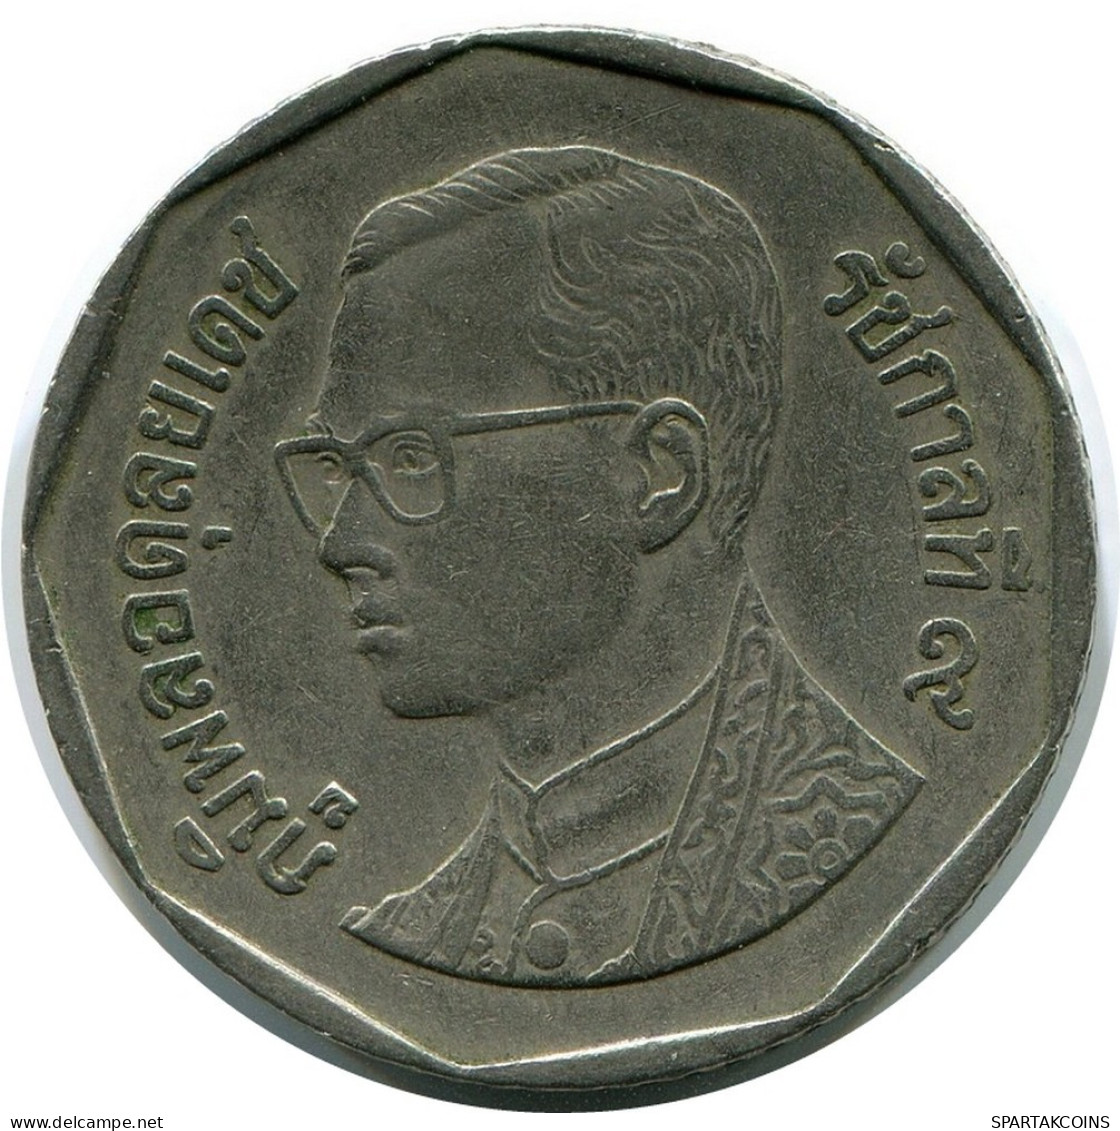 5 BAHT 2009 THAILAND Coin #AR213.U.A - Thailand